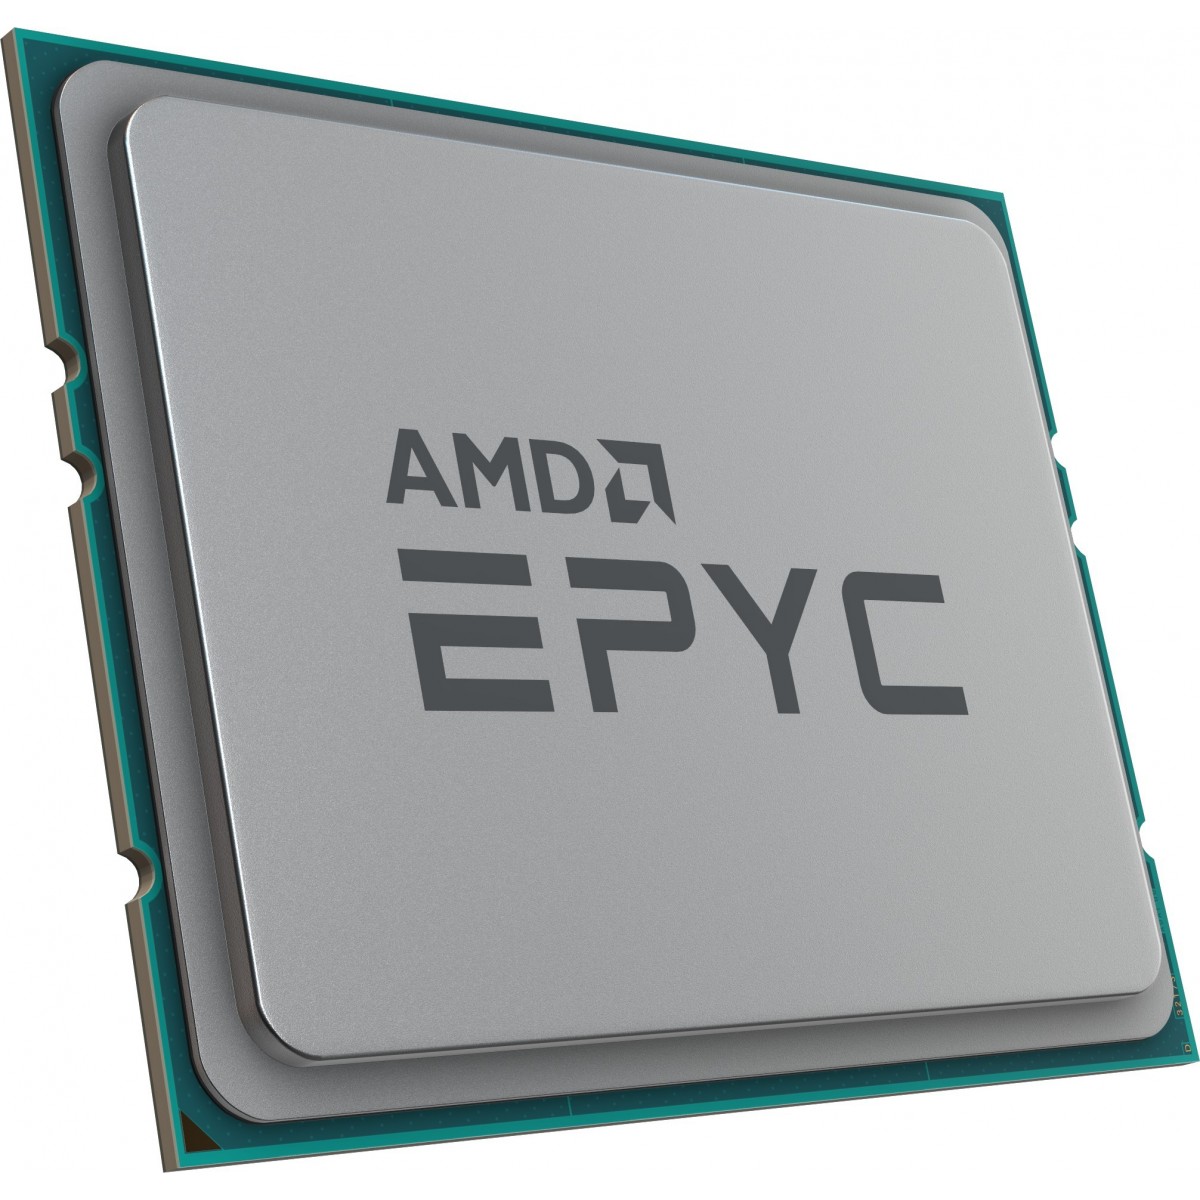 AMD CPU EPYC 7002 Series 32C/64T Model 7452 (2.35/3.35GHz Max Boost,128MB, 155W, SP3) Tray